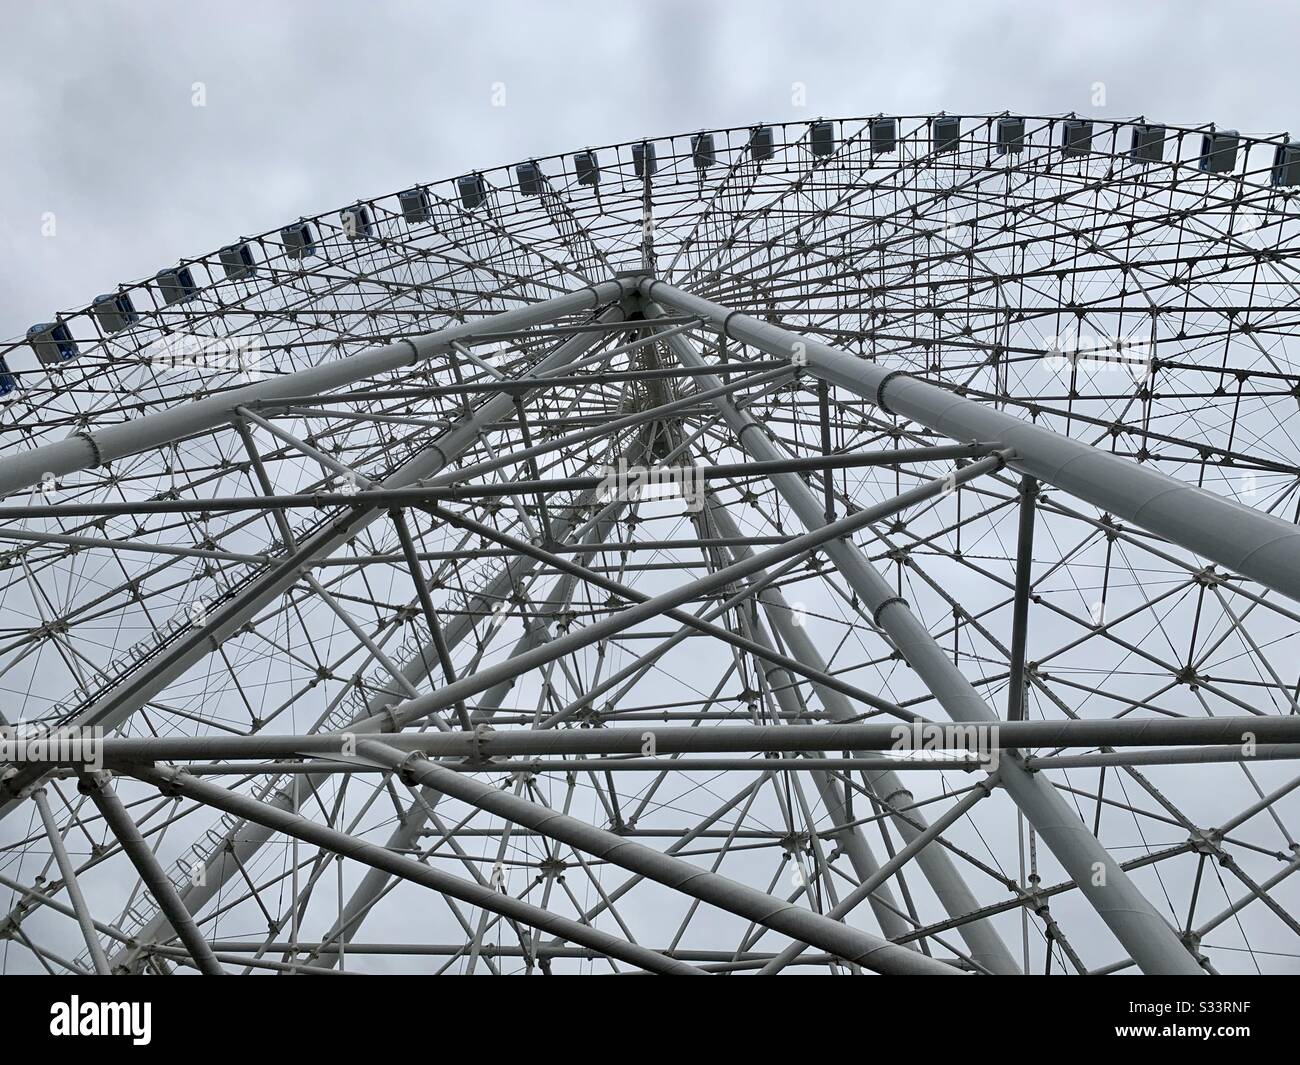 Ferris wheel Rio Star, Latin America’s biggest, measuring 88 meters high is located in Rio de Janeiro’s port area Stock Photo